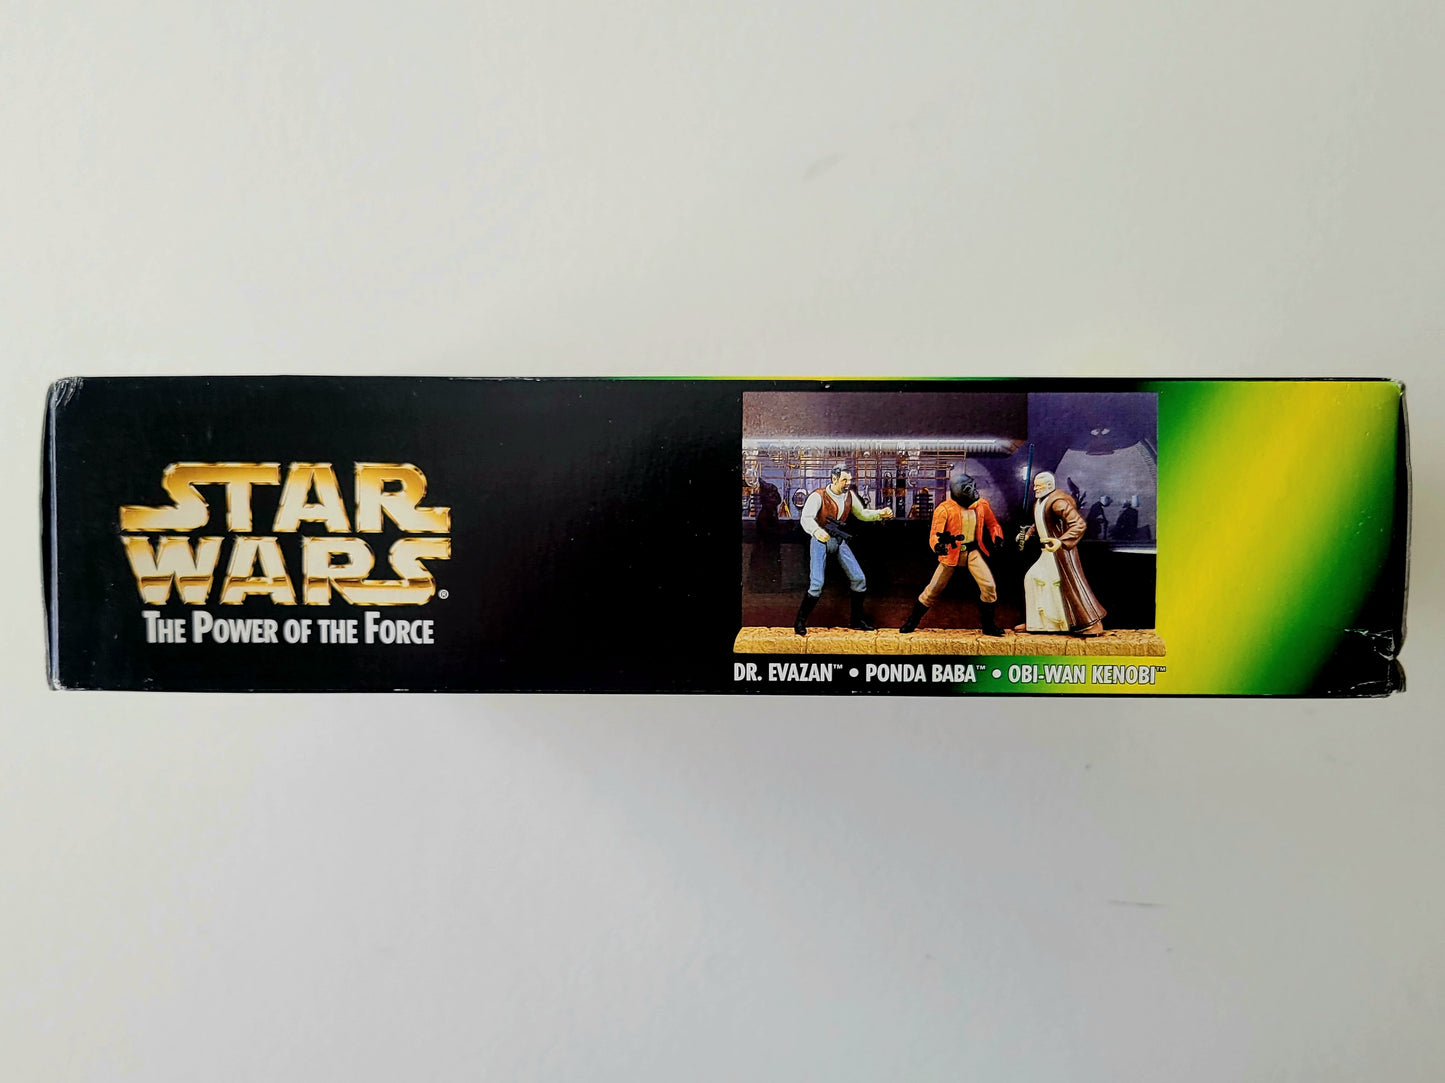 Star Wars: Power of the Force Cantina Showdown 3.75-Inch Action Figures (Dr. Evazan, Ponda Baba, Obi-Wan Kenobi)